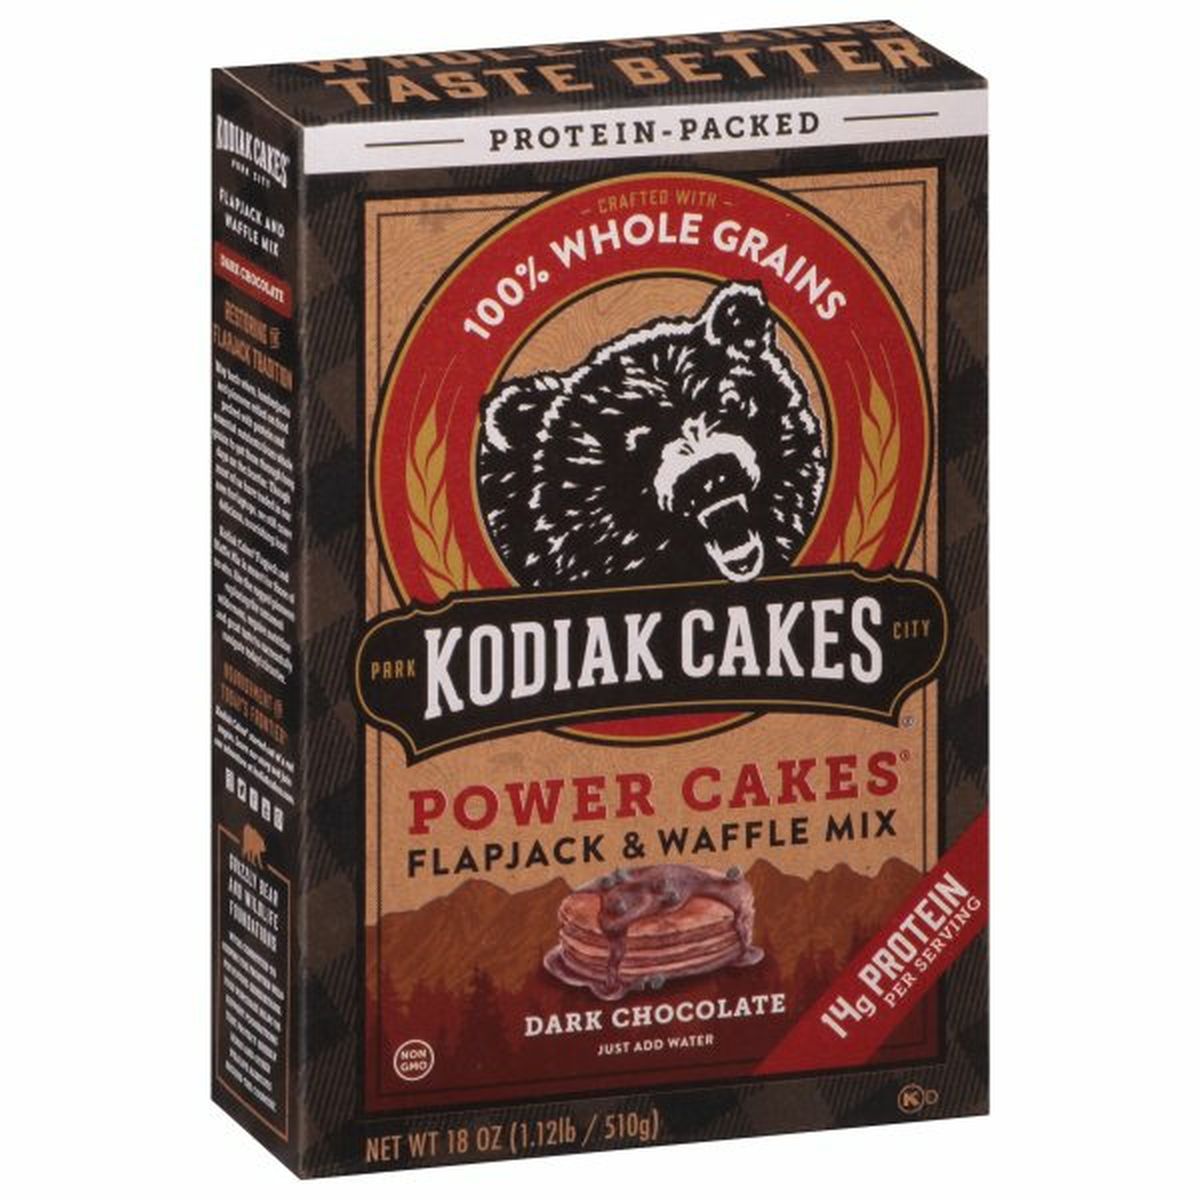 Calories in Kodiak Cakes Power Cakes Flapjack & Waffle Mix, Dark Chocolate